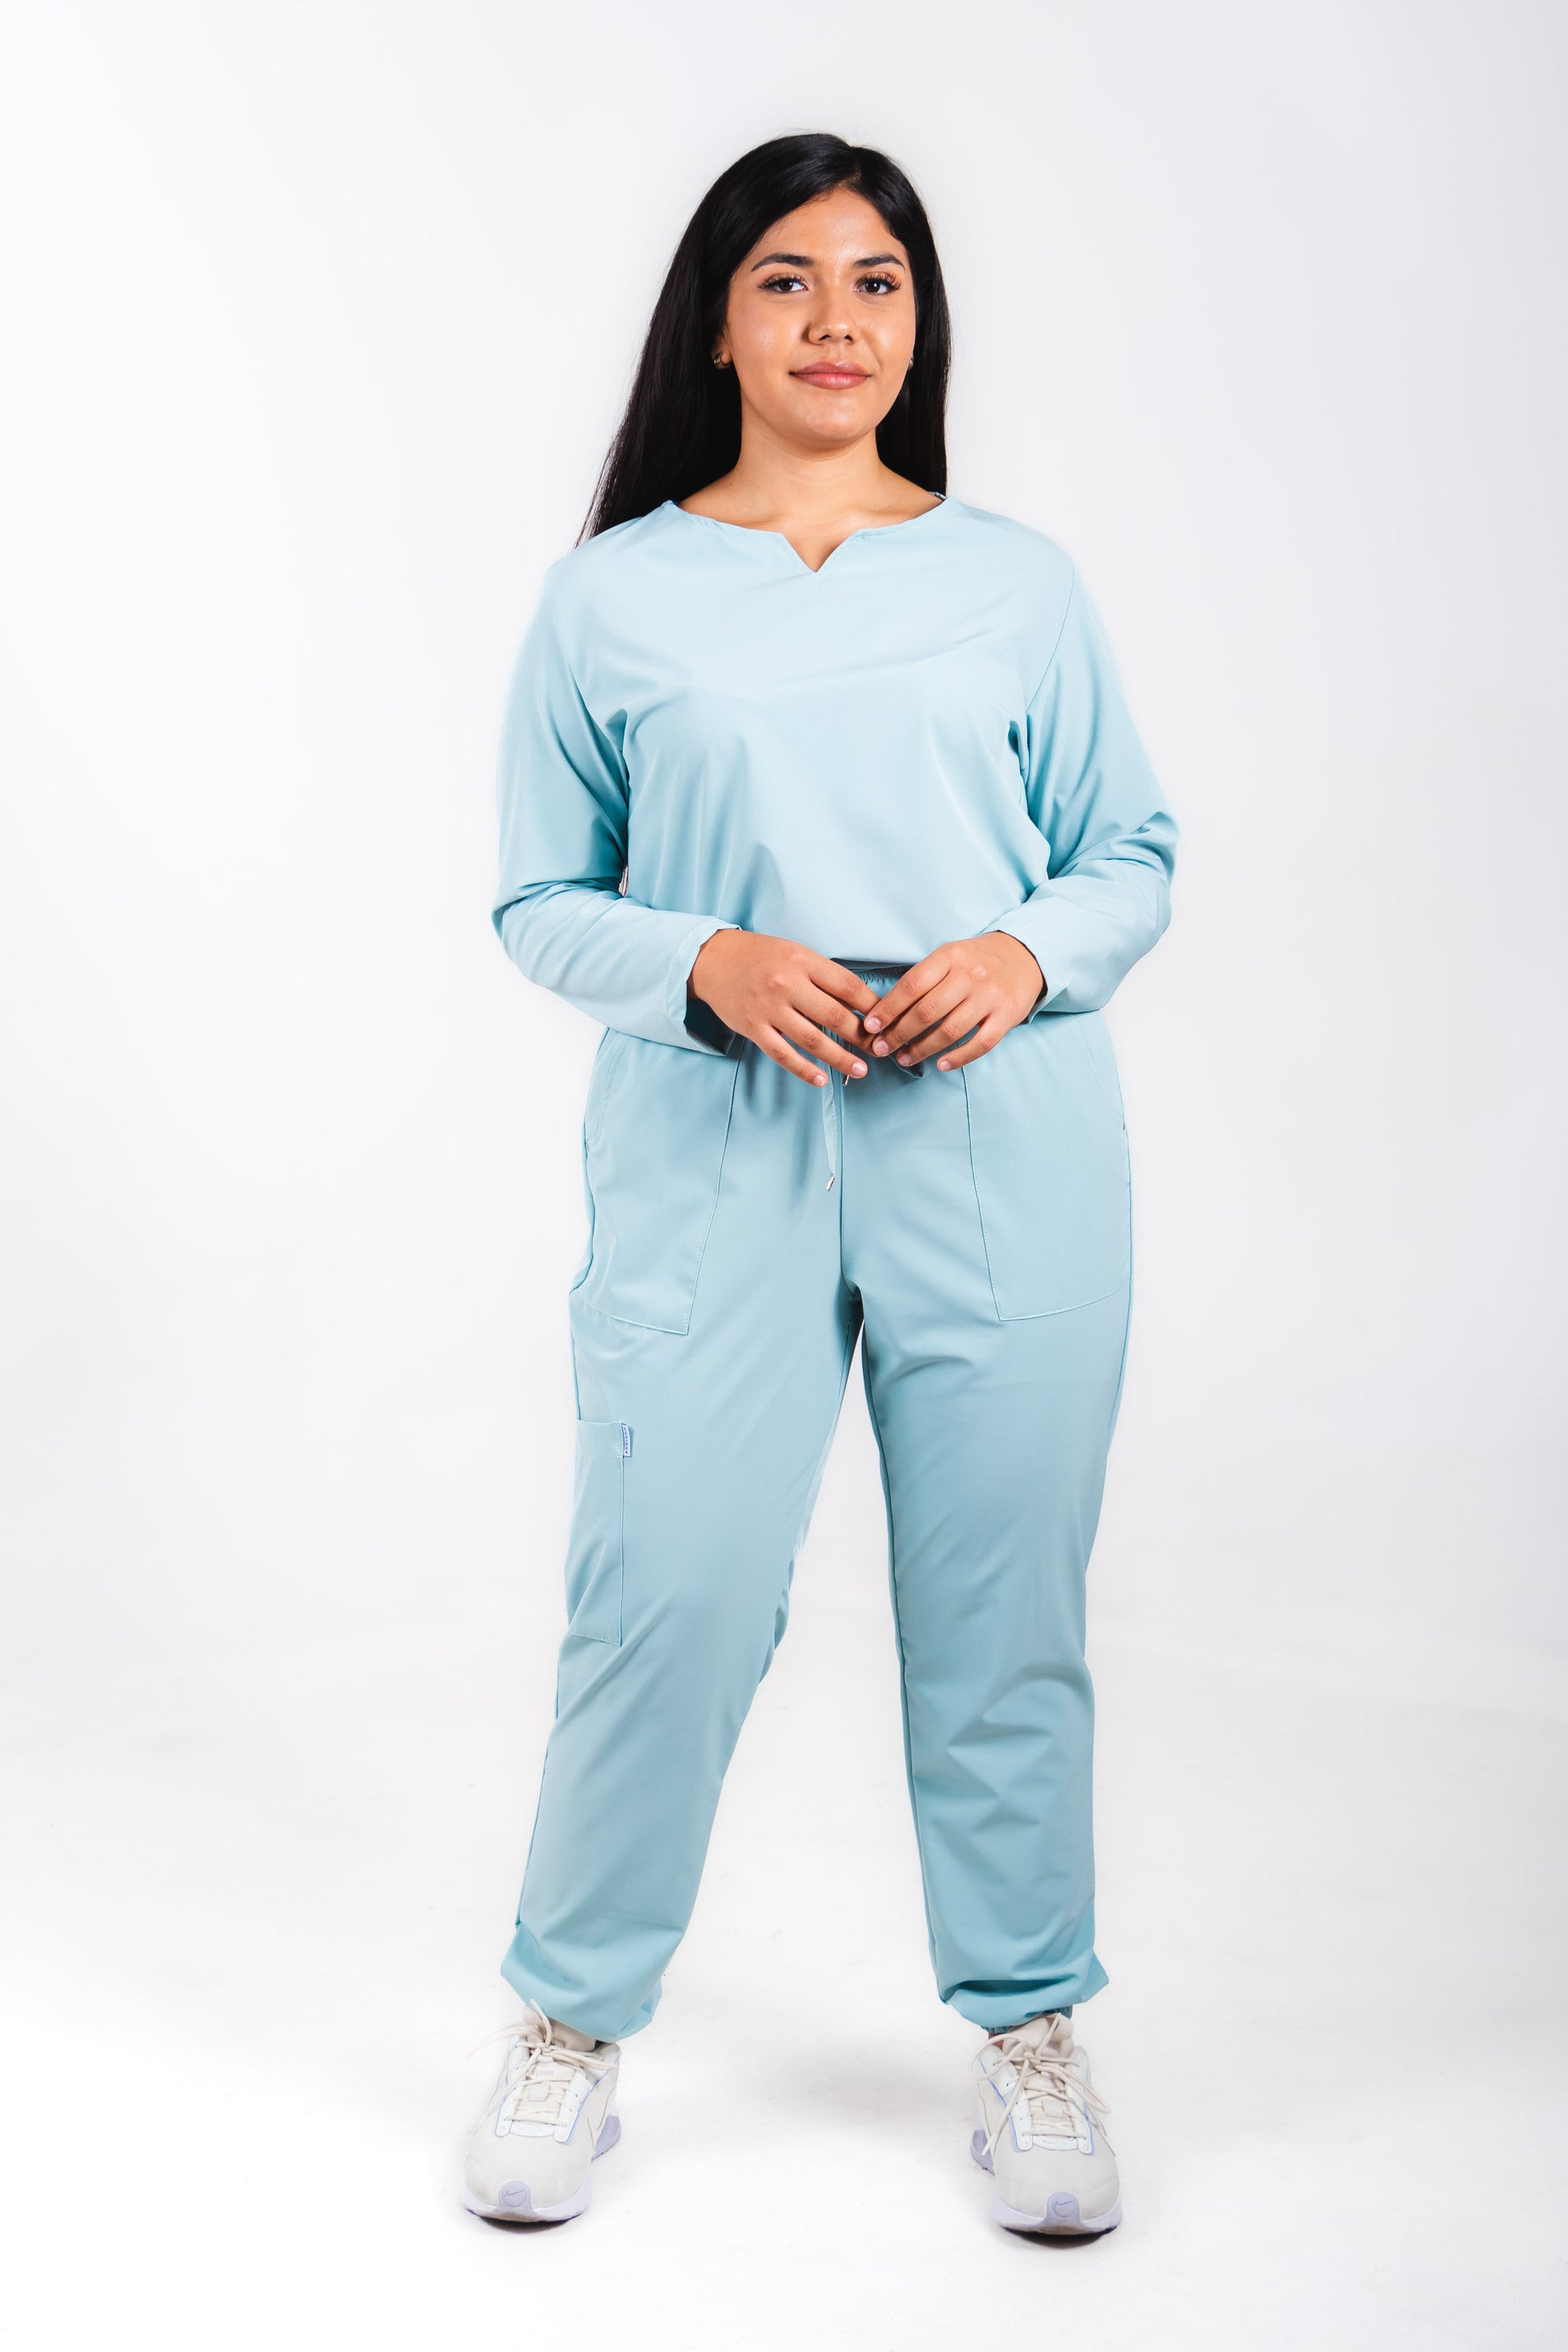 Uniforme quirúrgico para dama color cemento,  manga larga corte jogger. modelo winter marca addisonscrubs.